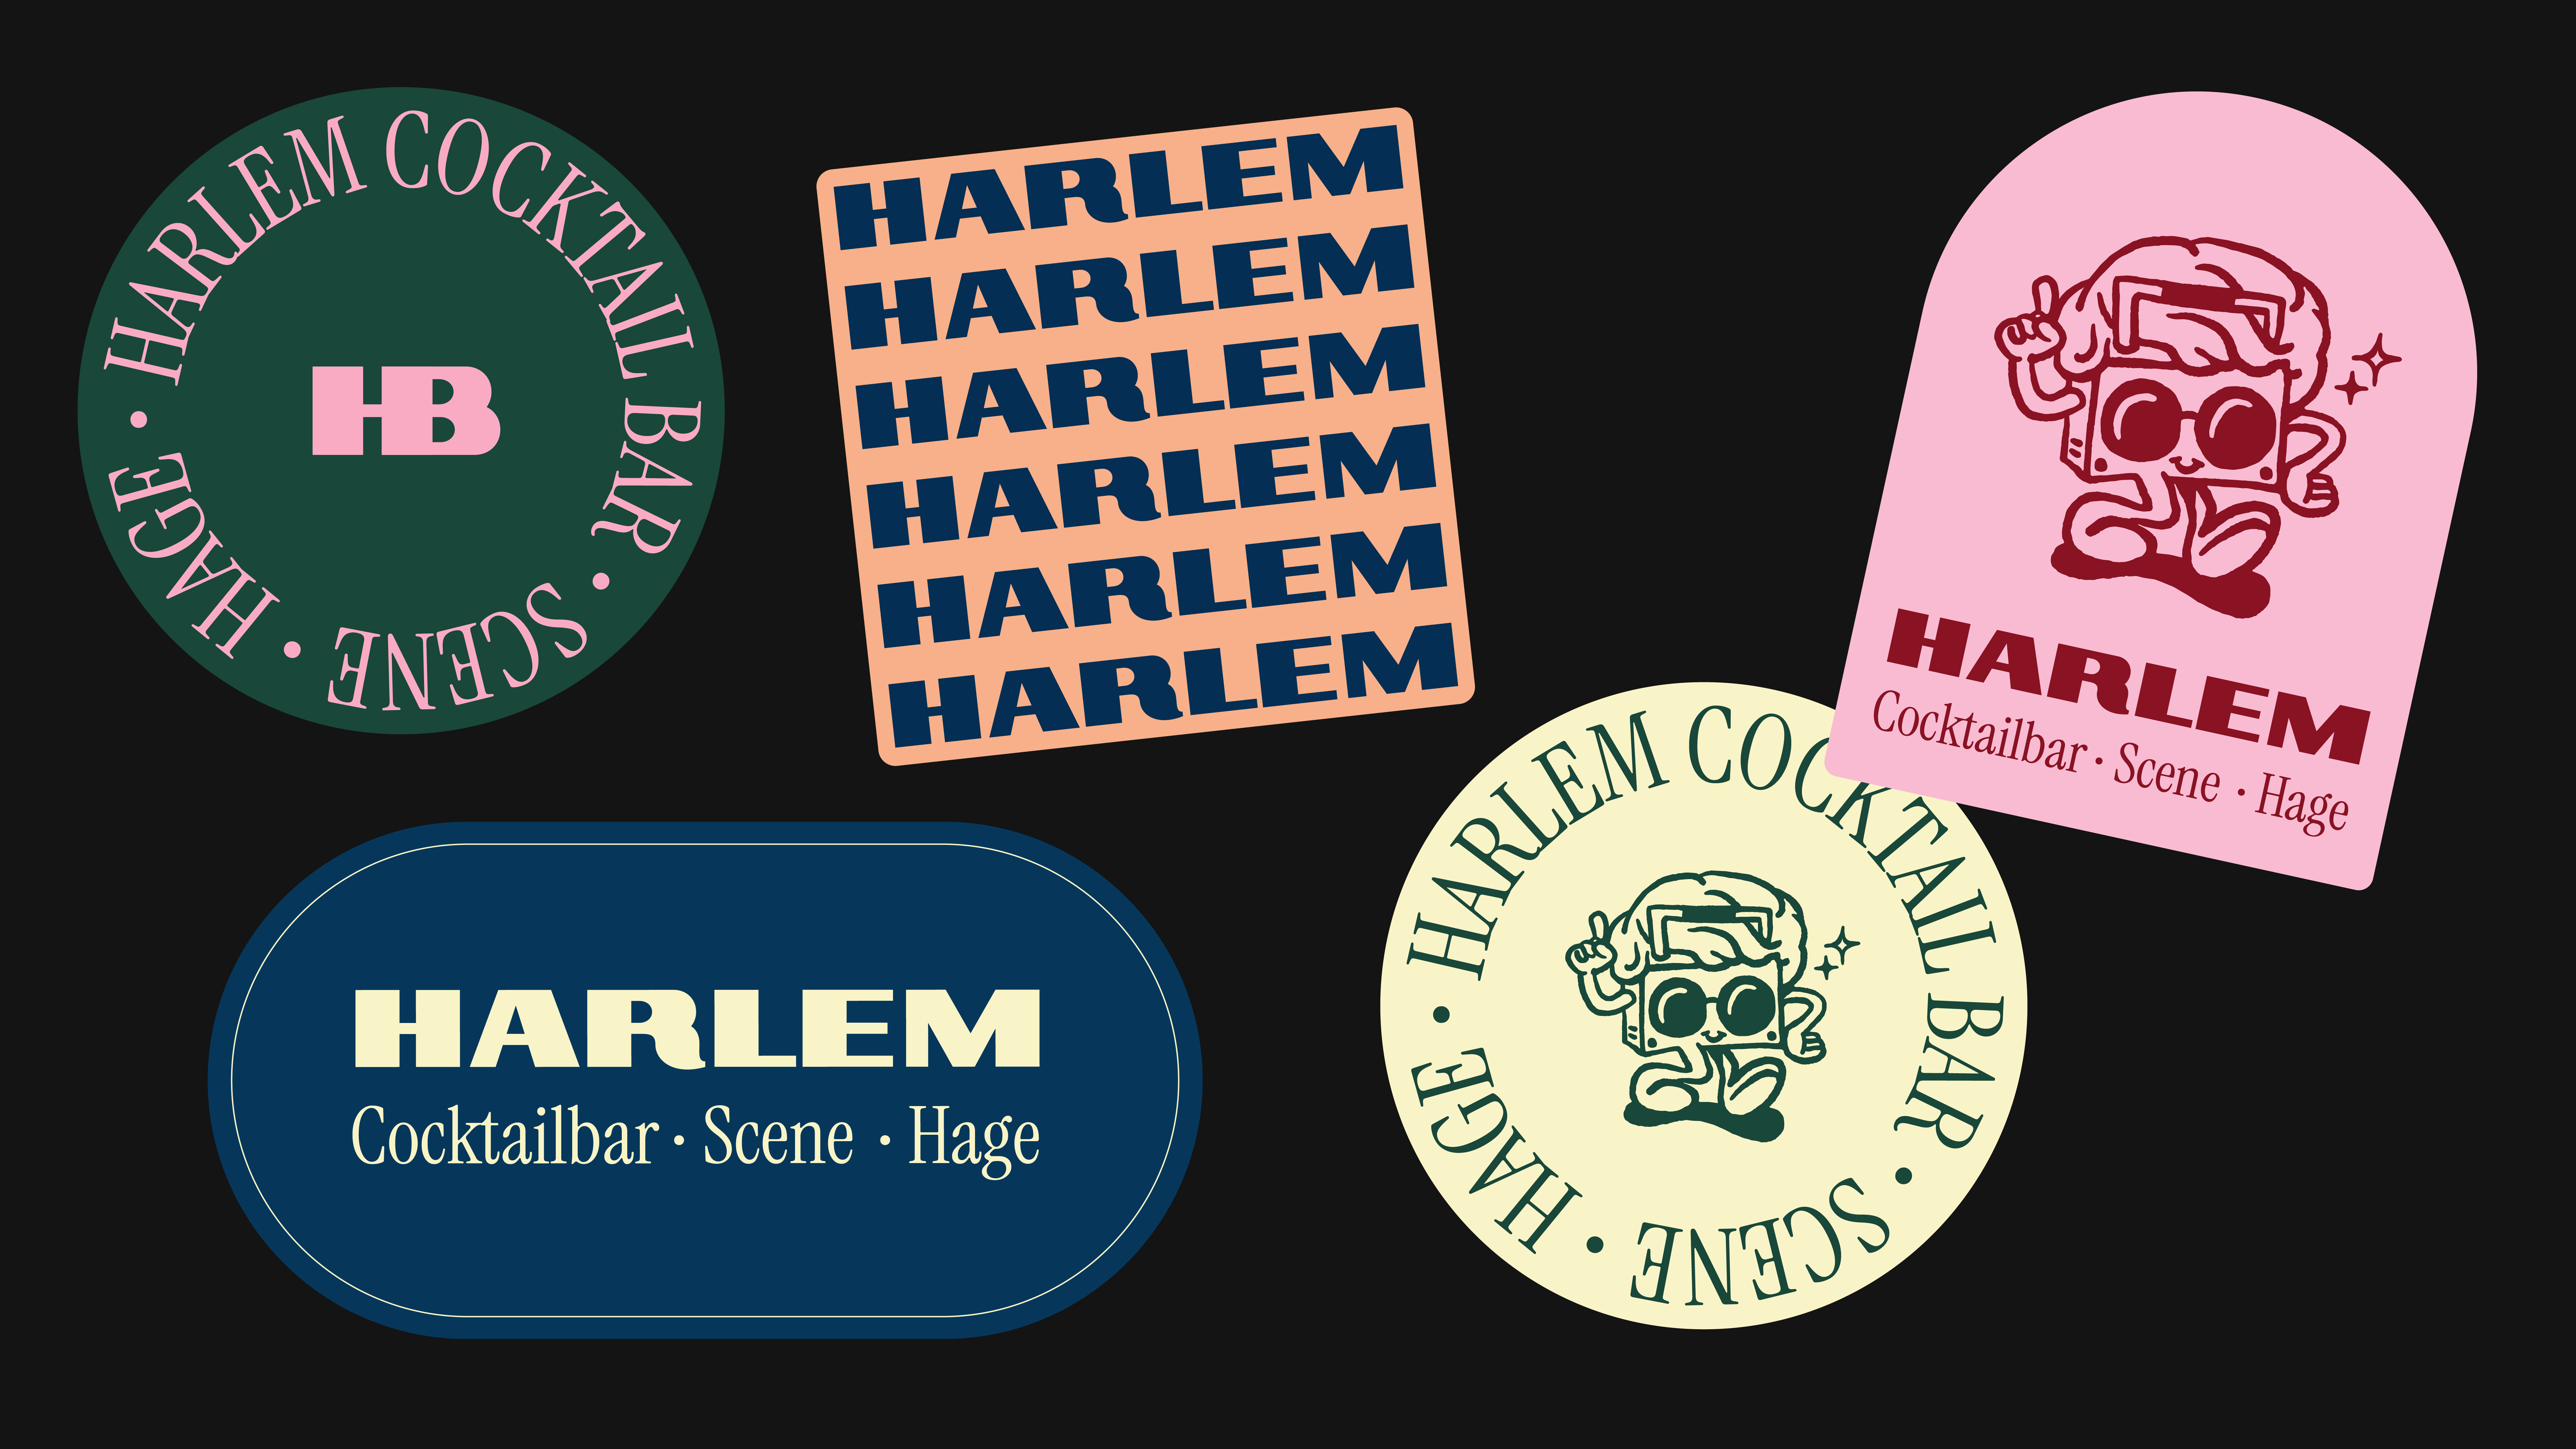 Harlem - Coming soon